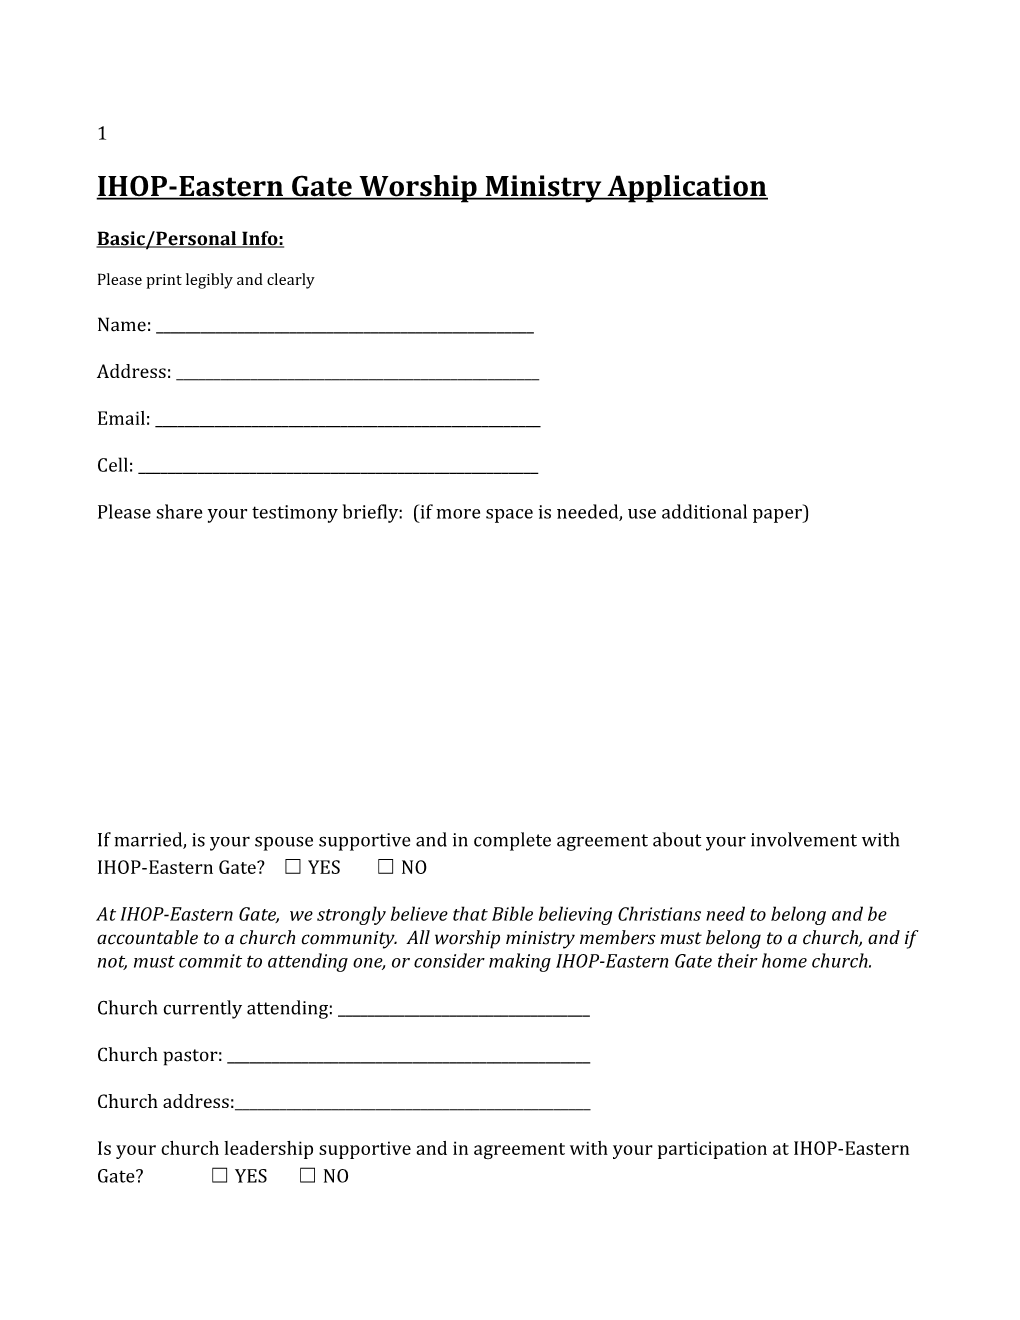 IHOP-Eastern Gate Worship Ministry Application